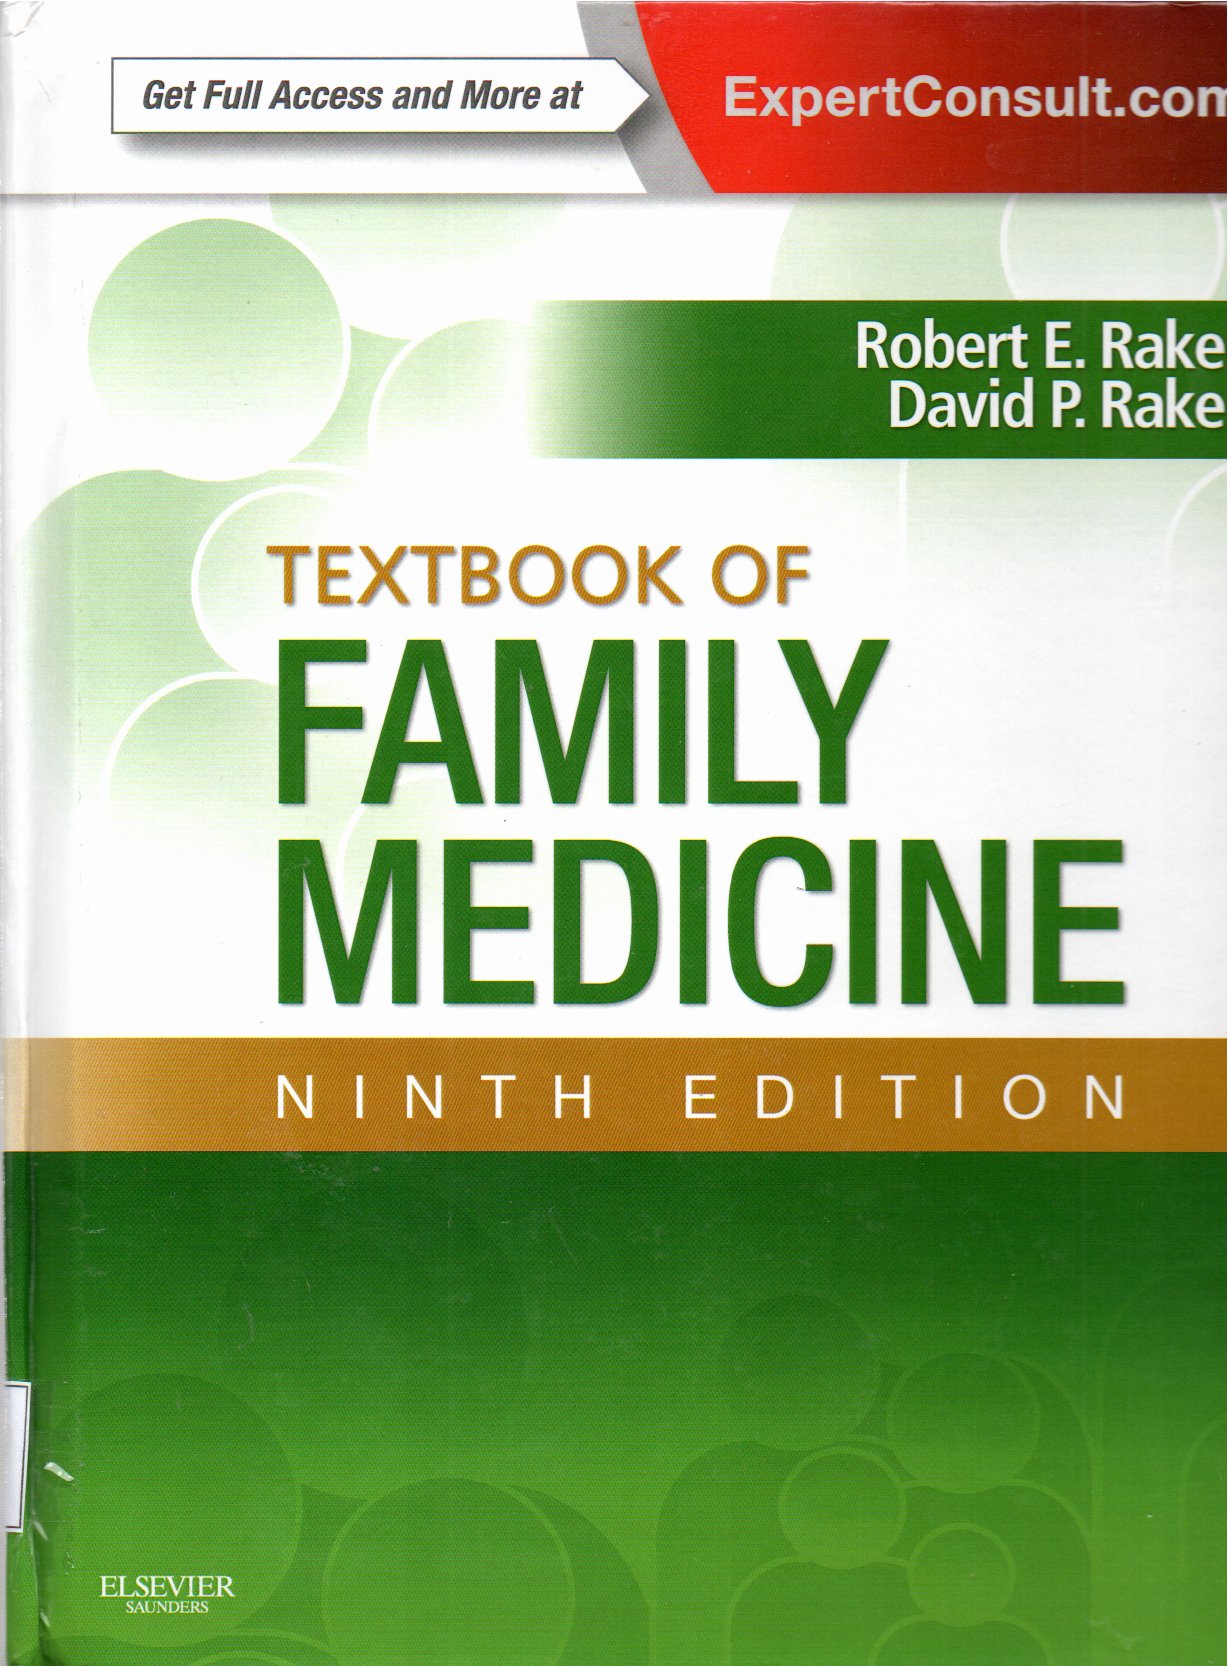 Textbook of family medicine